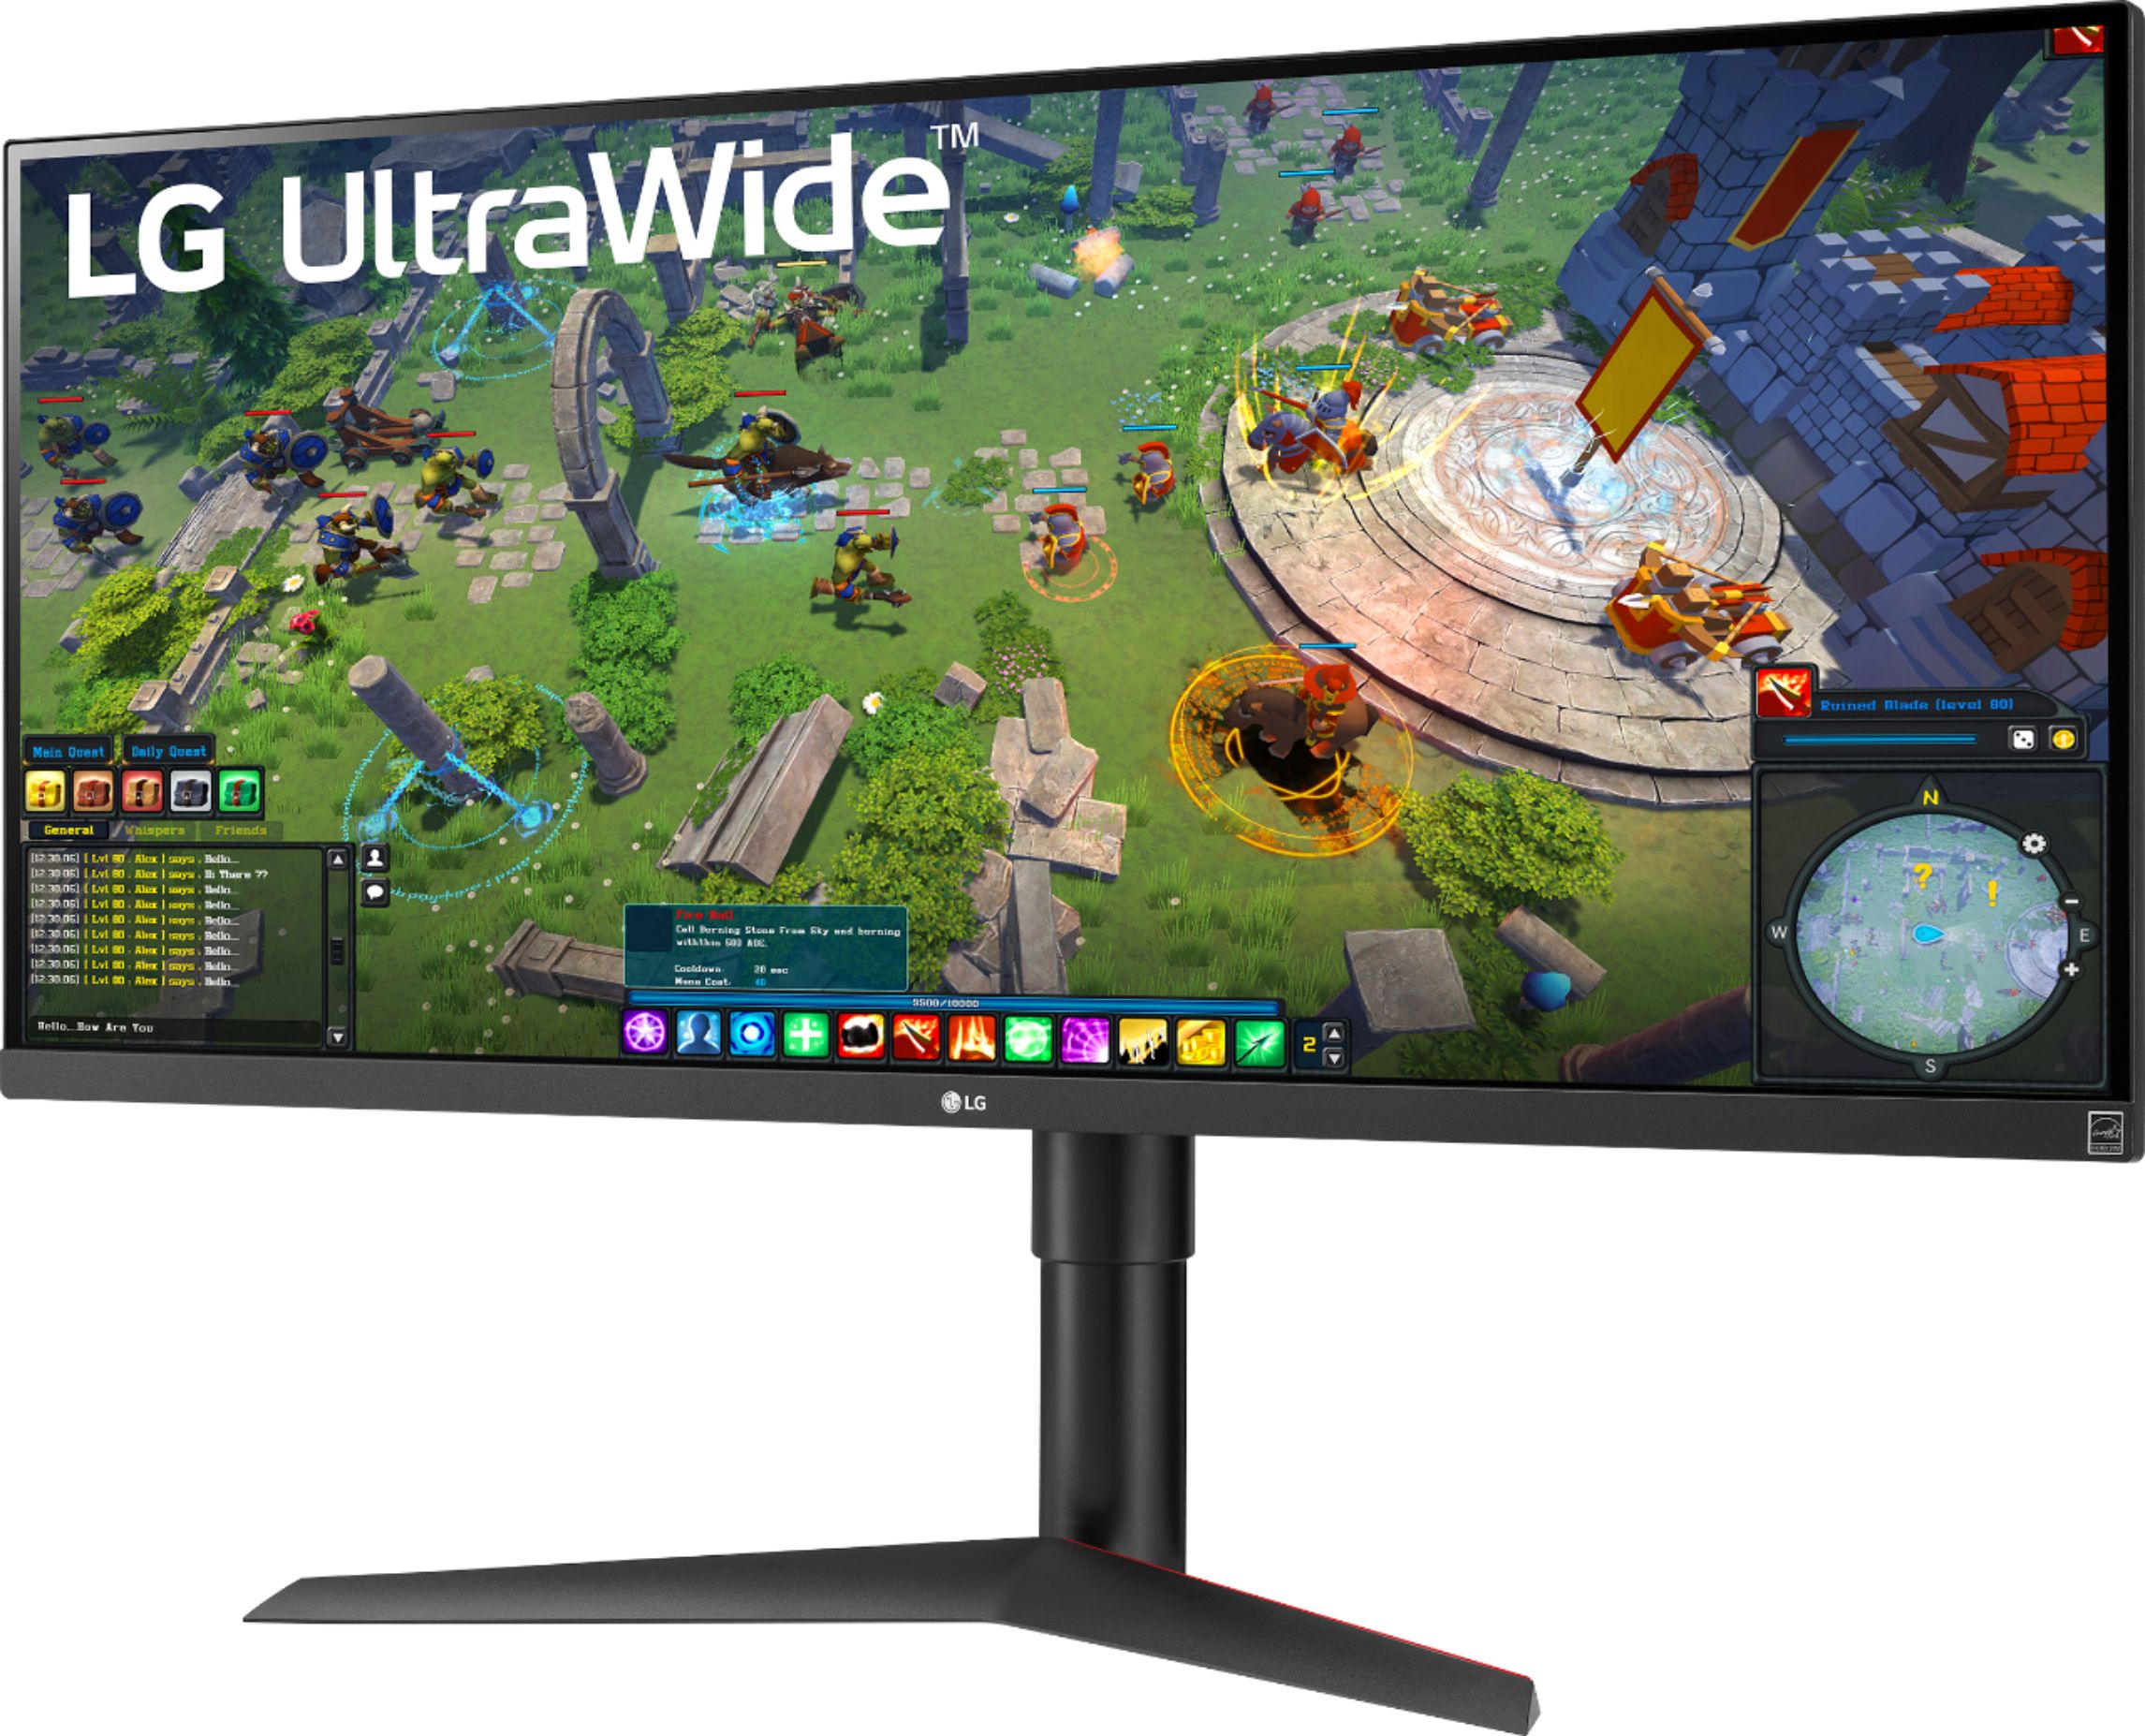 Left View: LG - 34” UltraWide FHD HDR FreeSync Monitor (USB) - Black